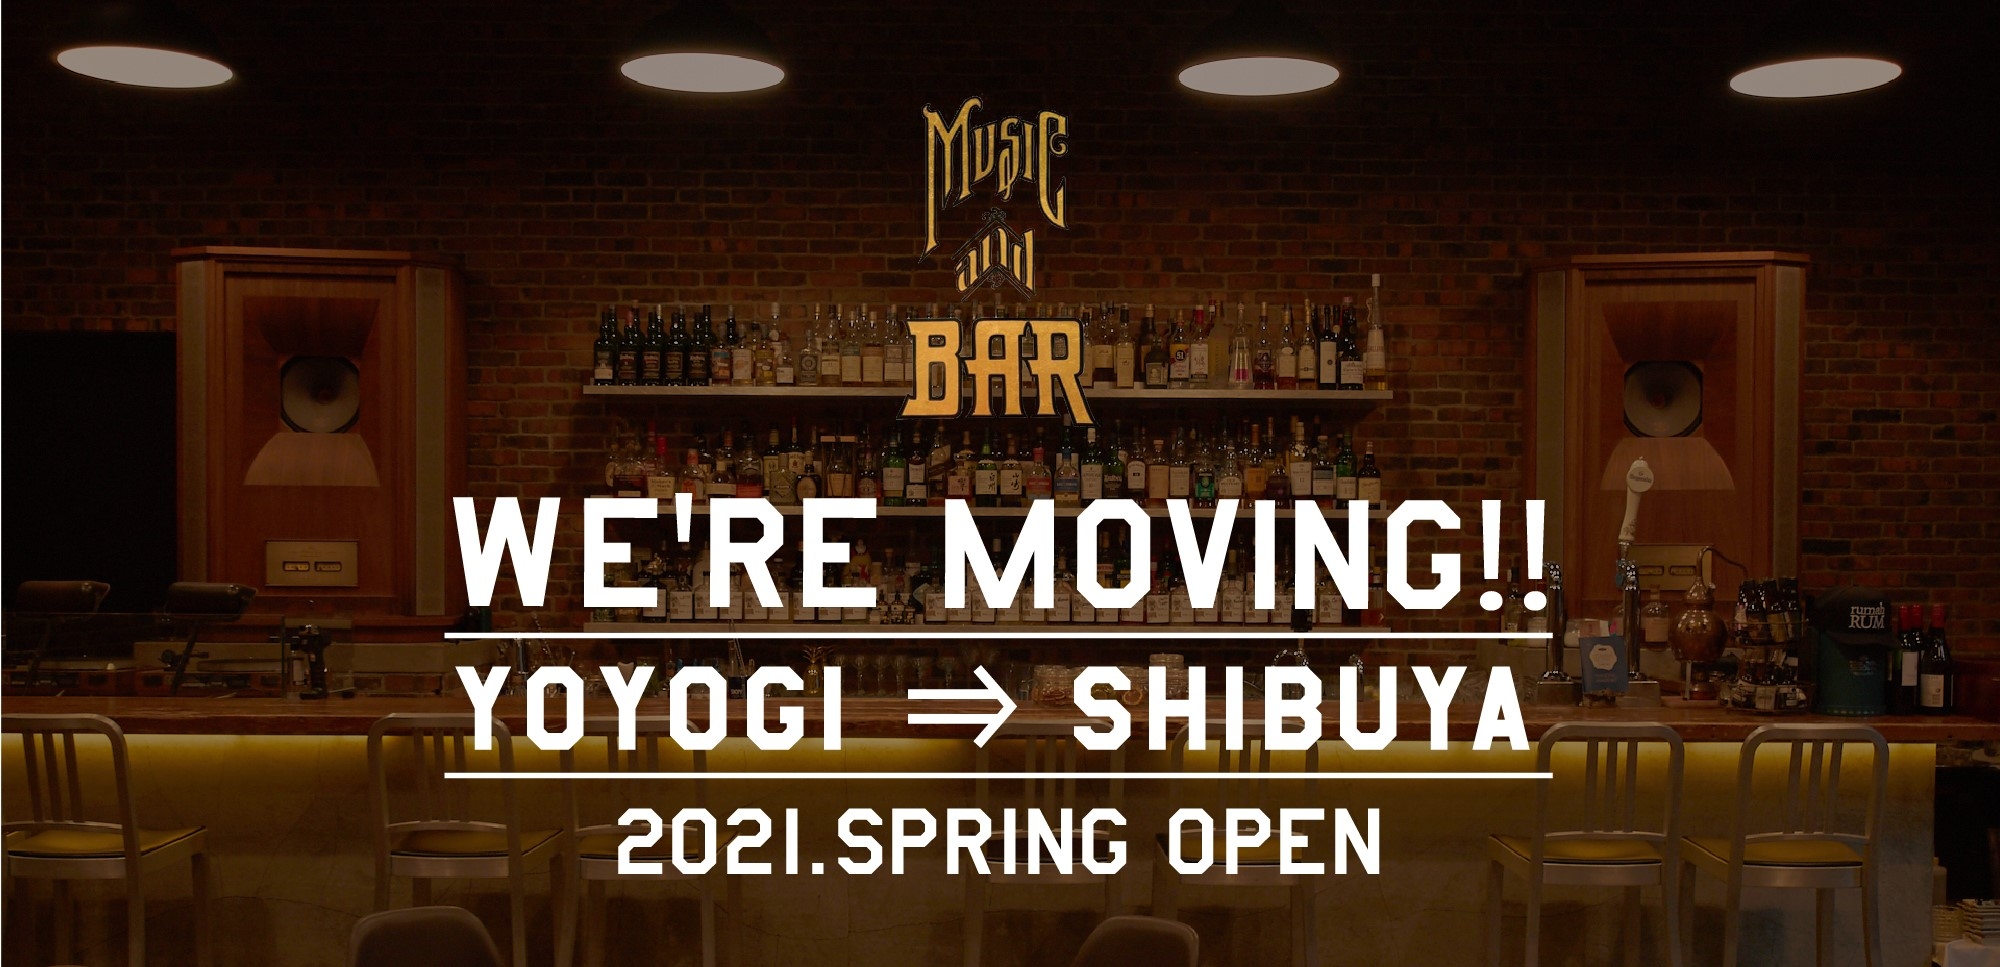 SHIBUYA MUSIC BAR
４月オープンに向けてスタッフ募集中！